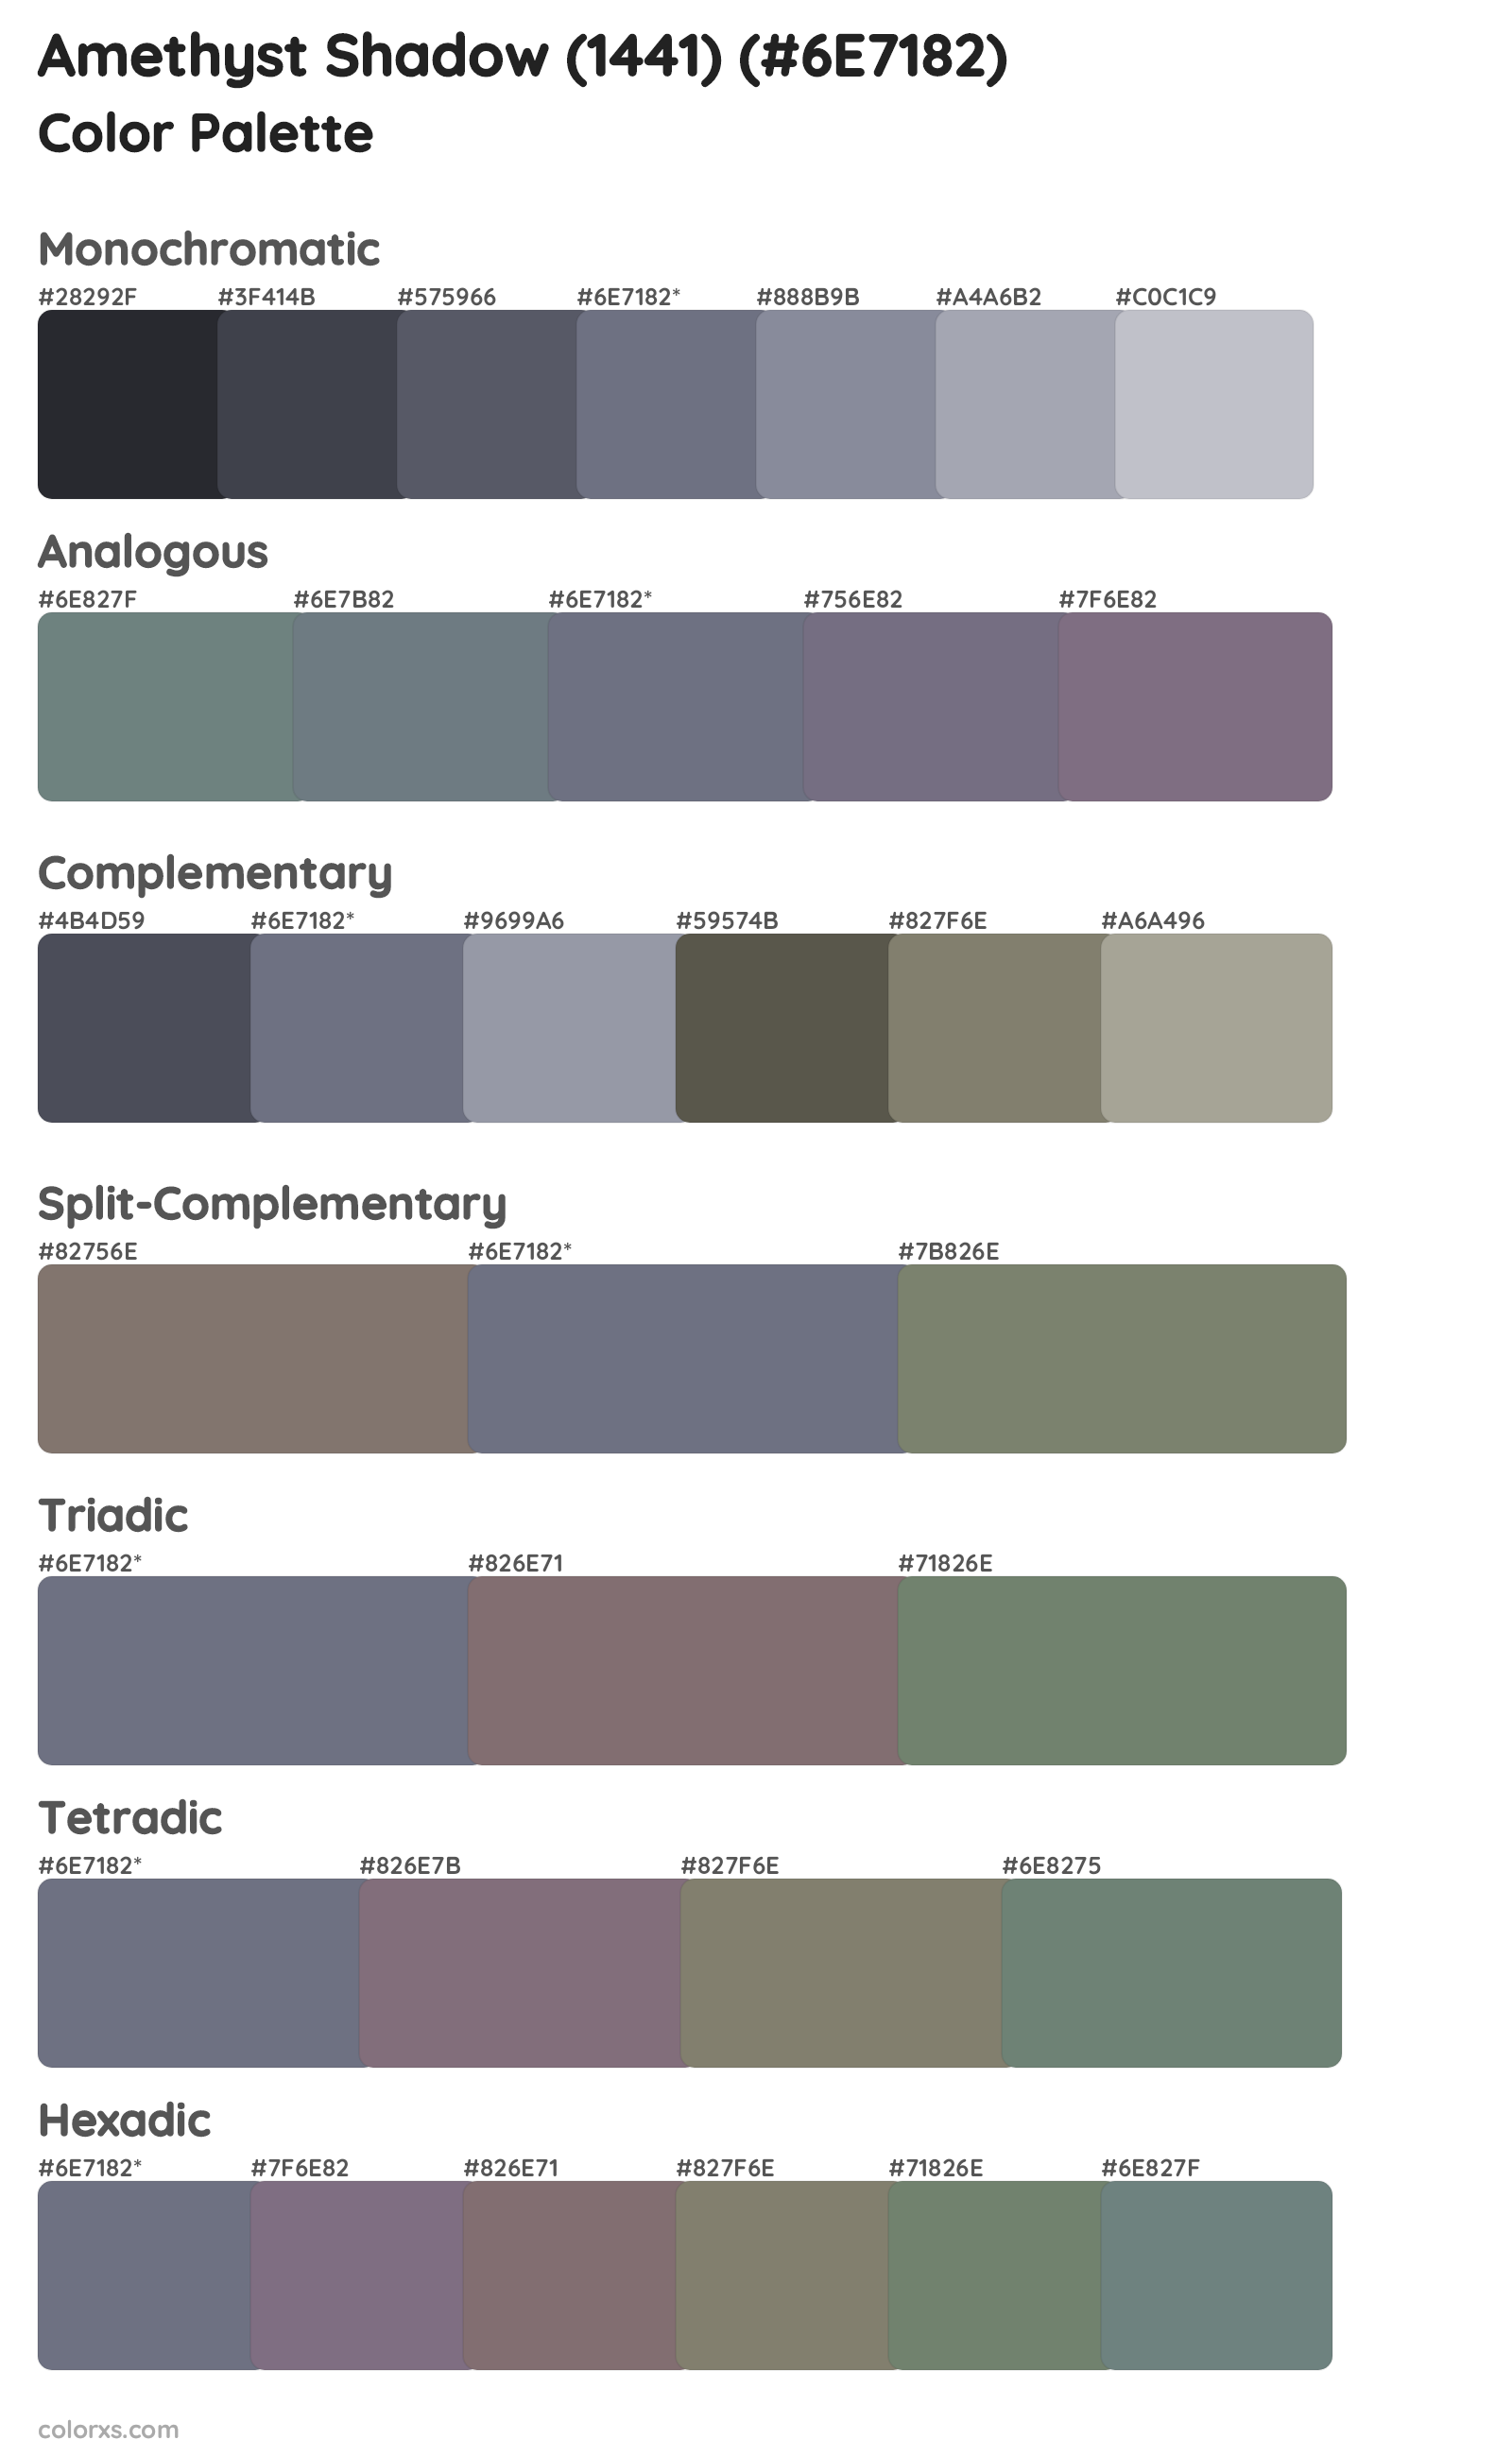 Amethyst Shadow (1441) Color Scheme Palettes